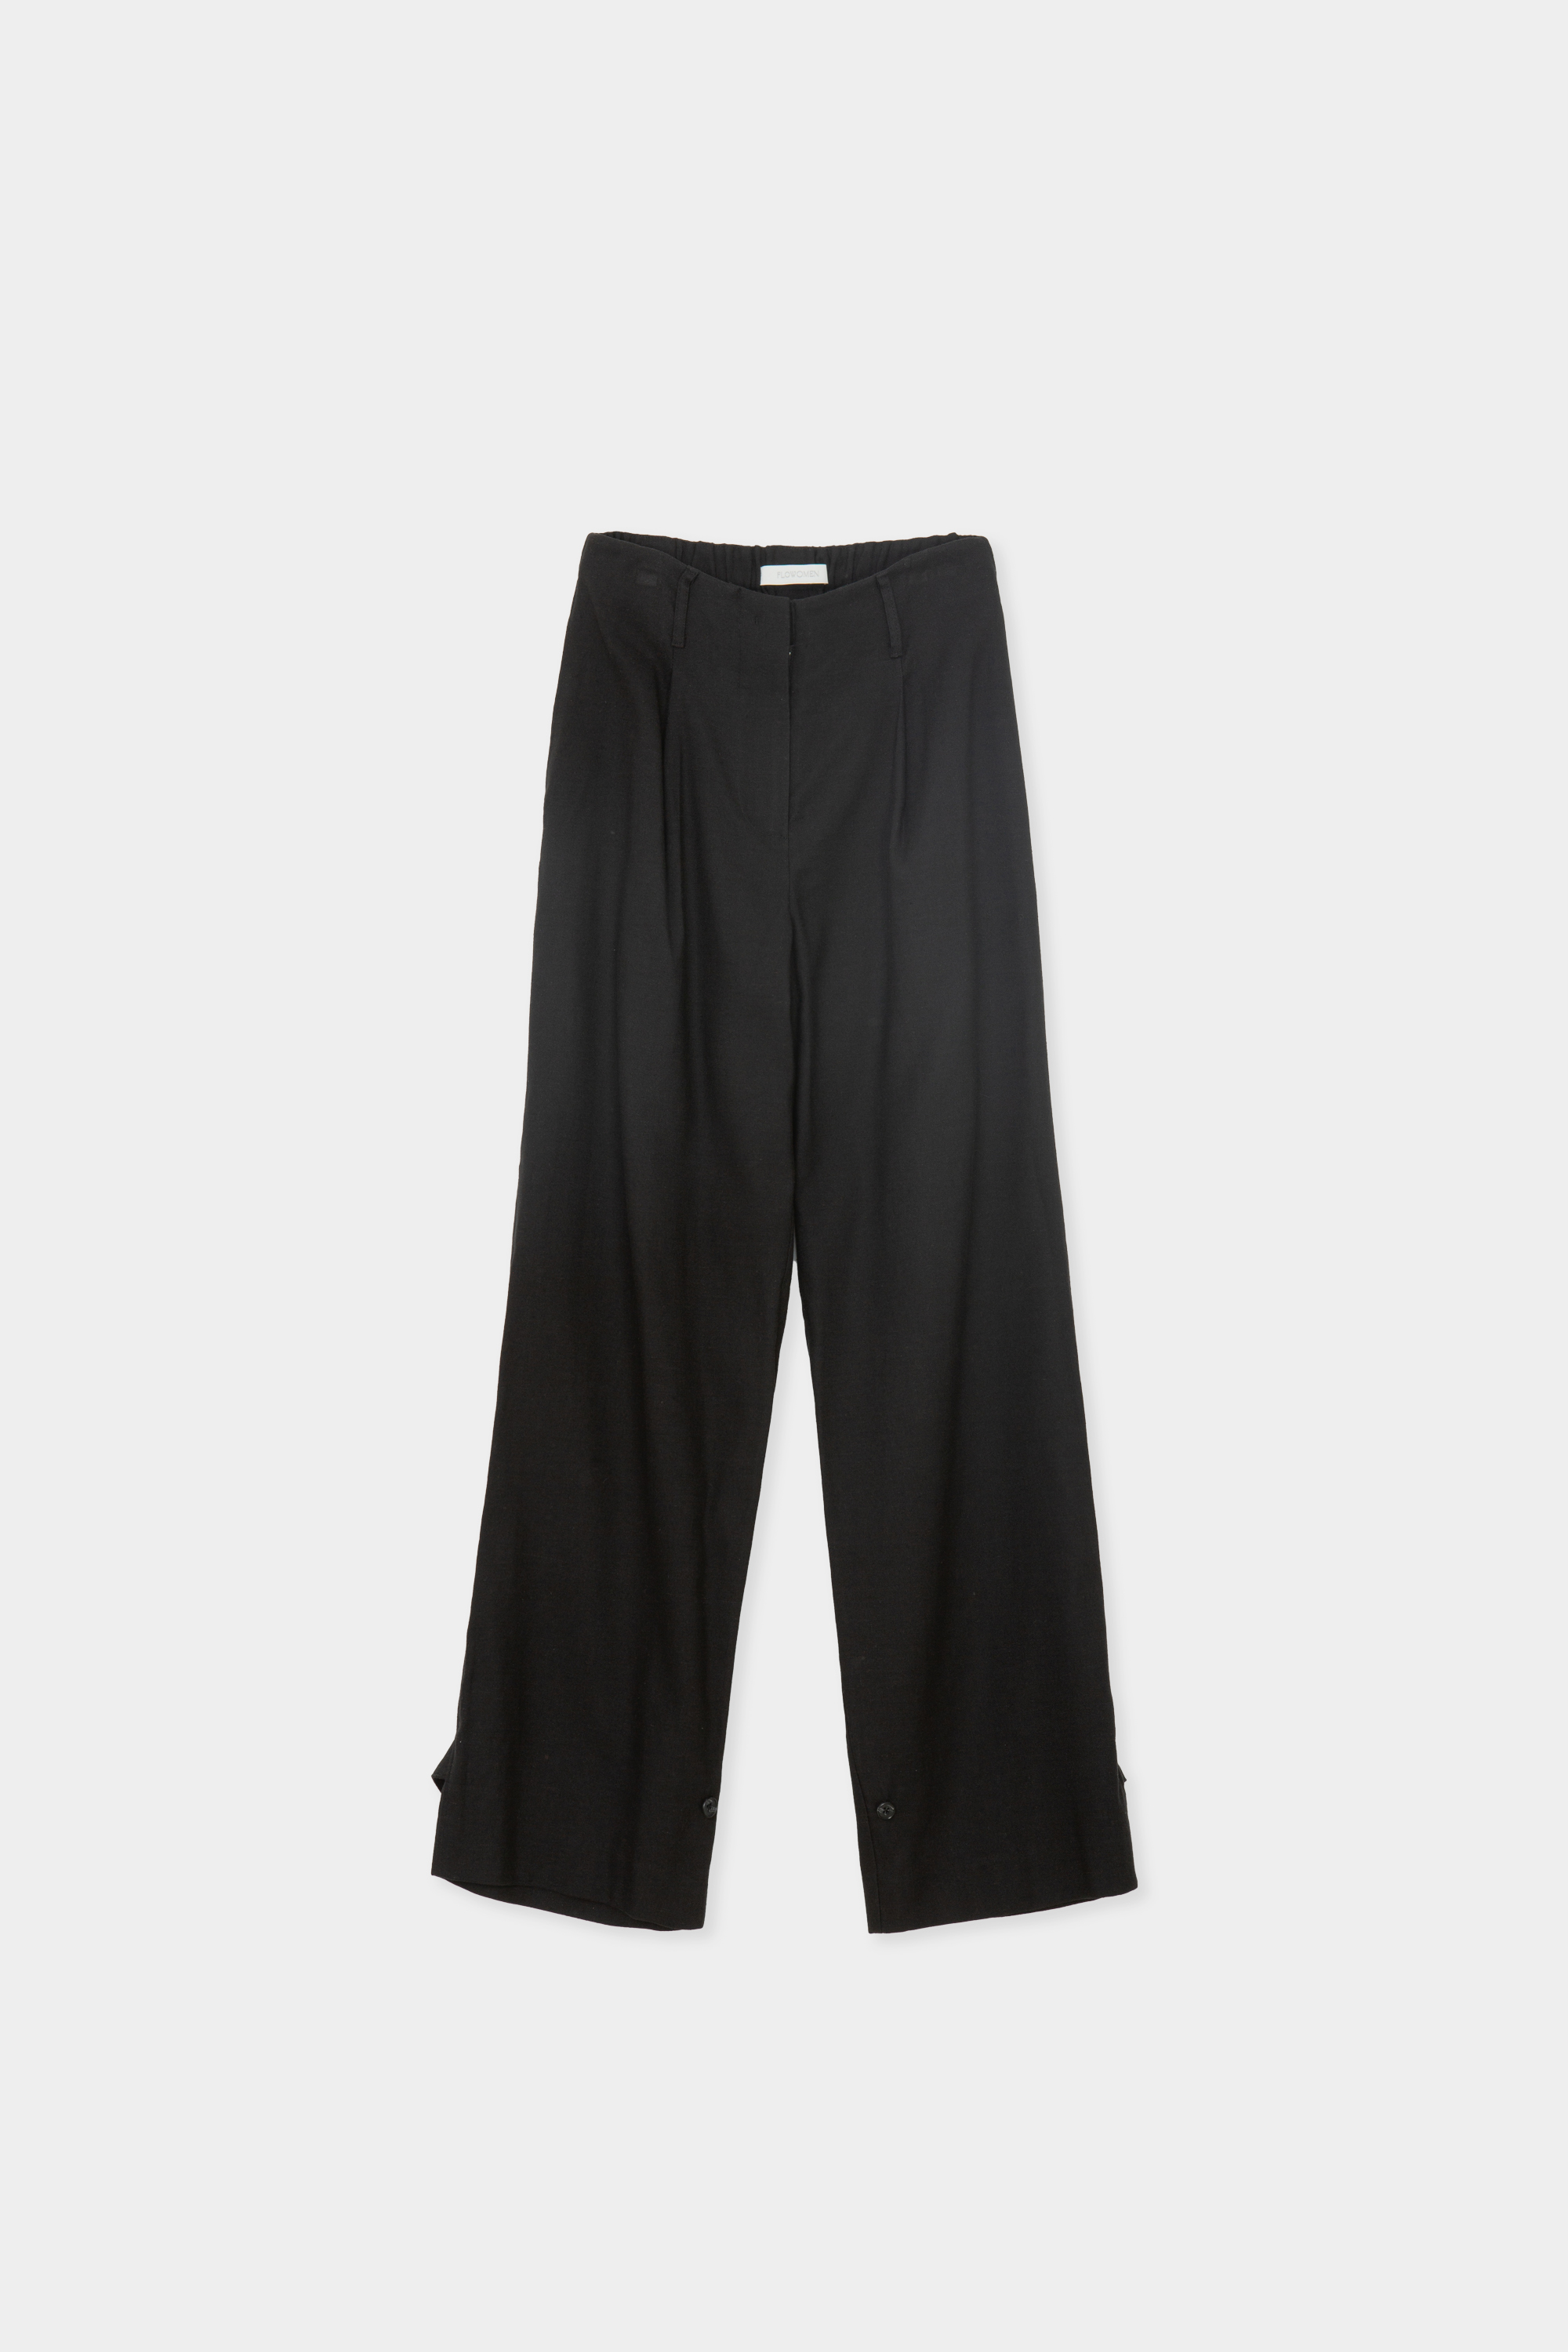 Linen Strap Pants (Black)